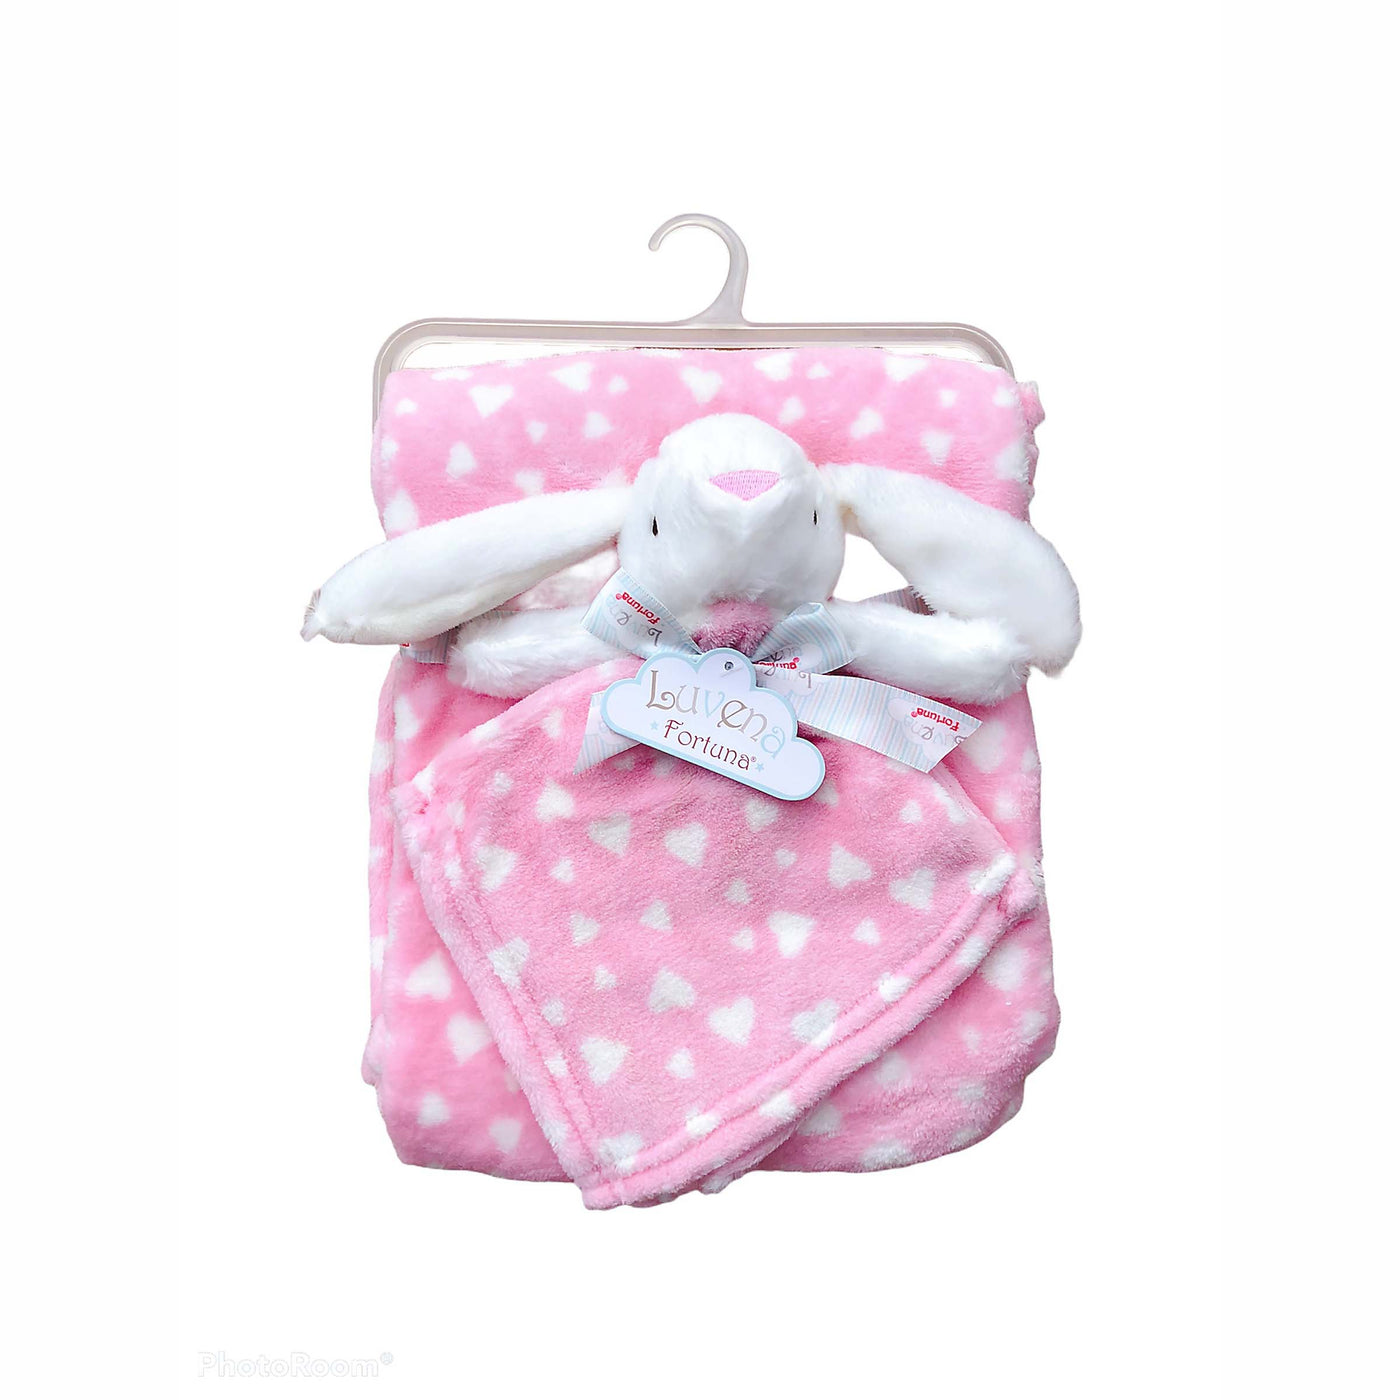 Luvena Fortuna Plush Blanket n Security Blanket Set Pink Bunny S19630 - Little Kooma